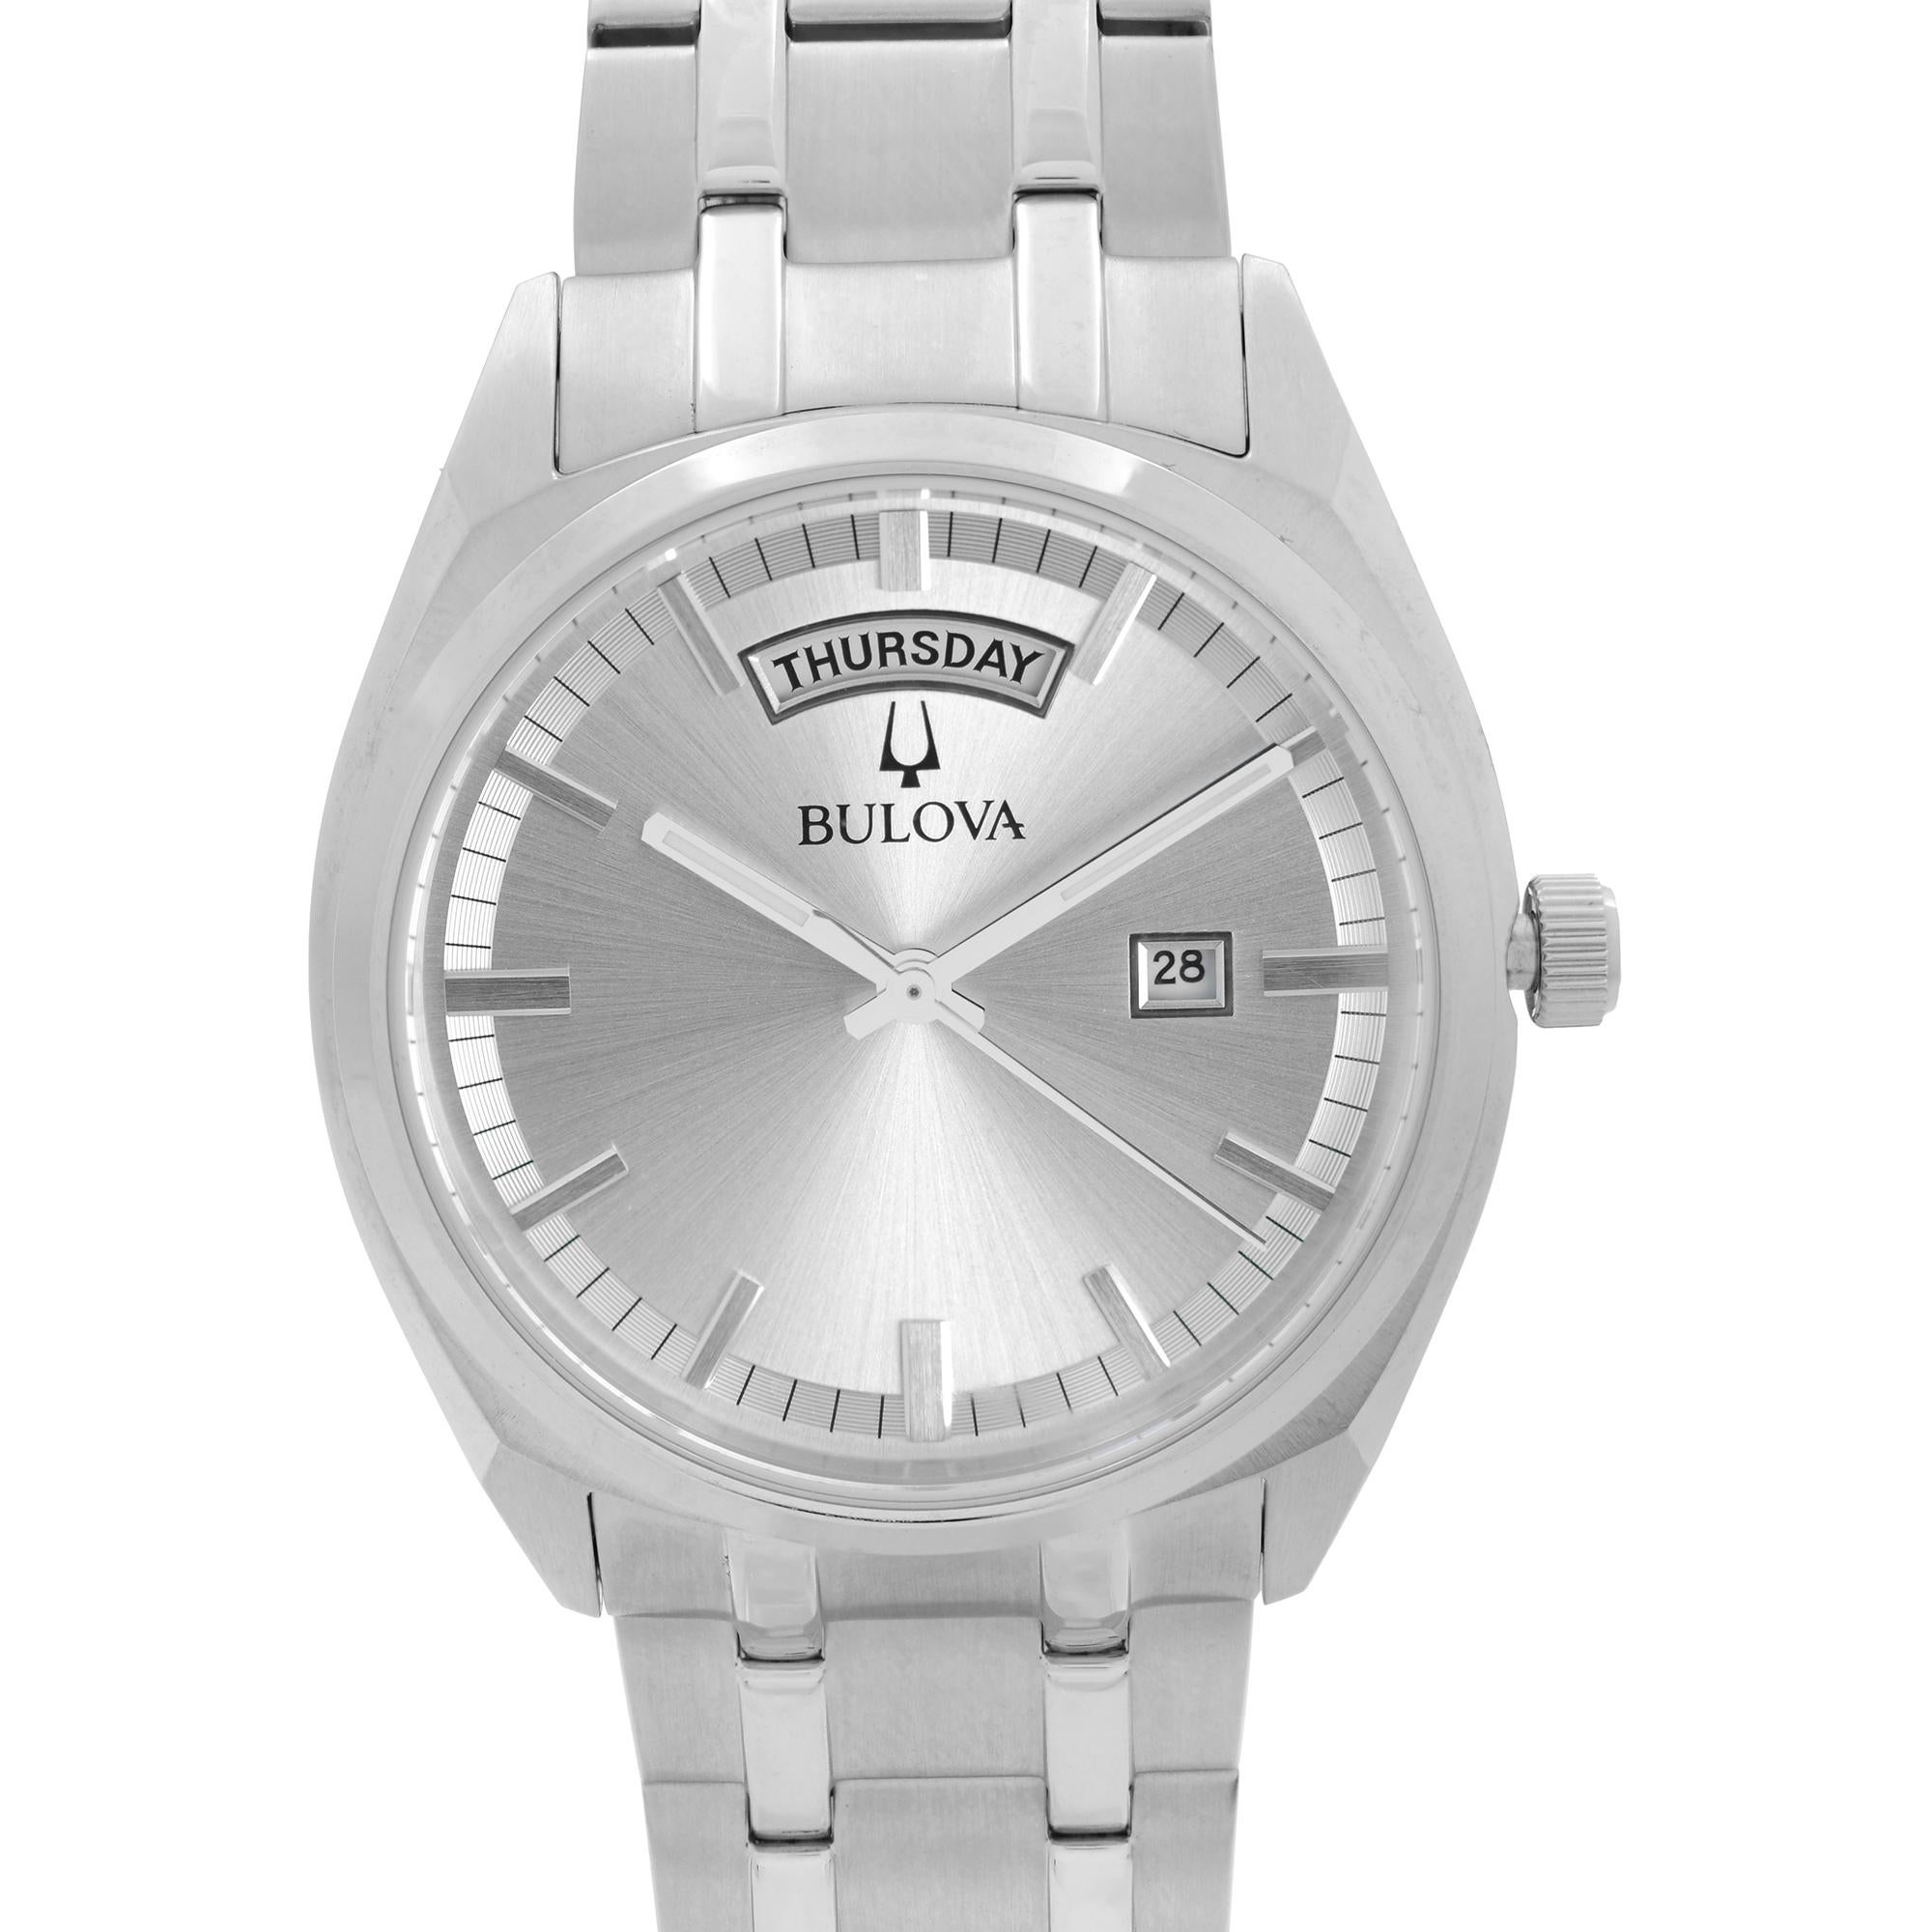 Bulova 96C127 - Classic Watch